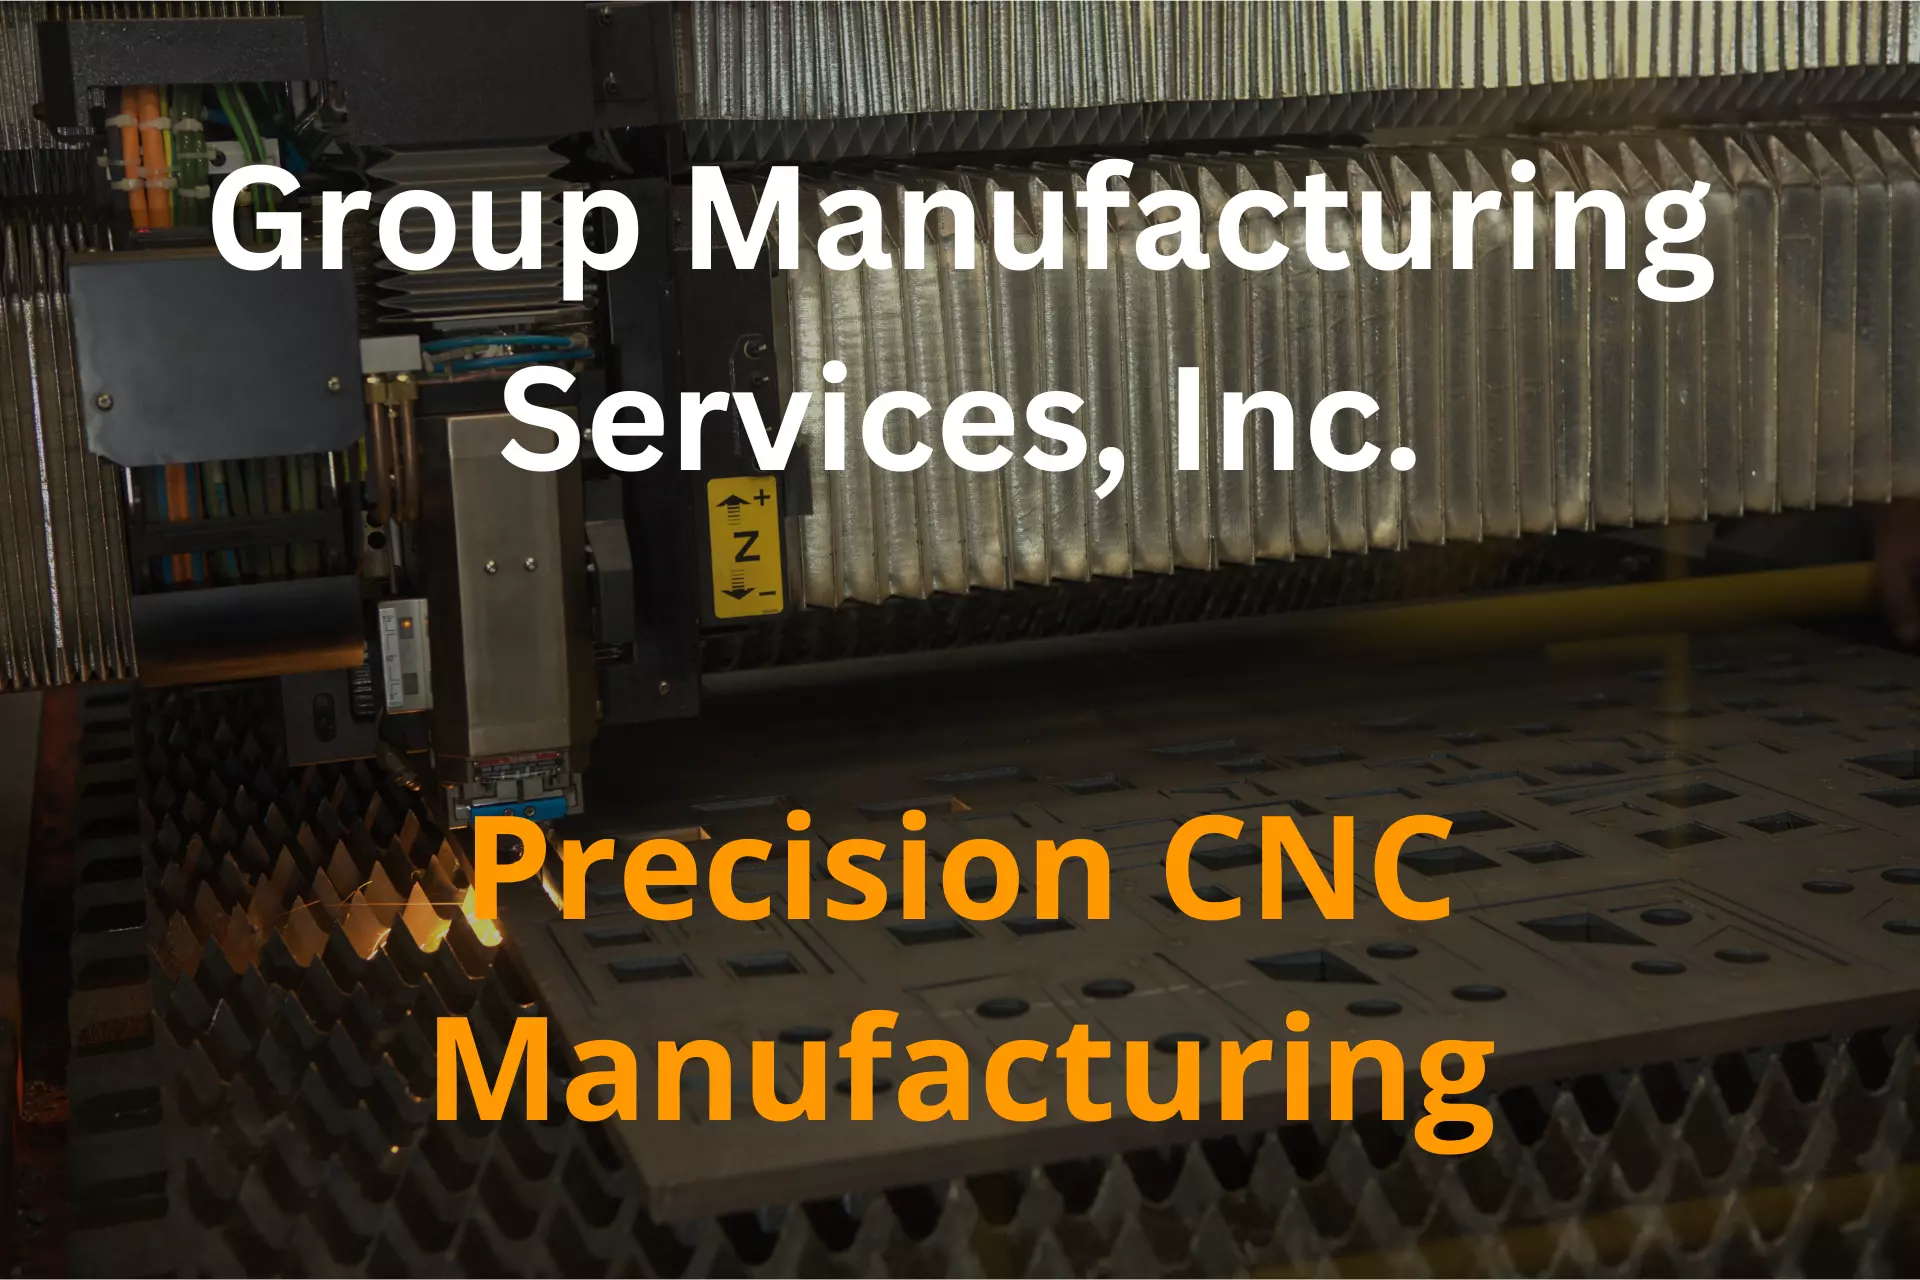 Precision CNC Manufacturing